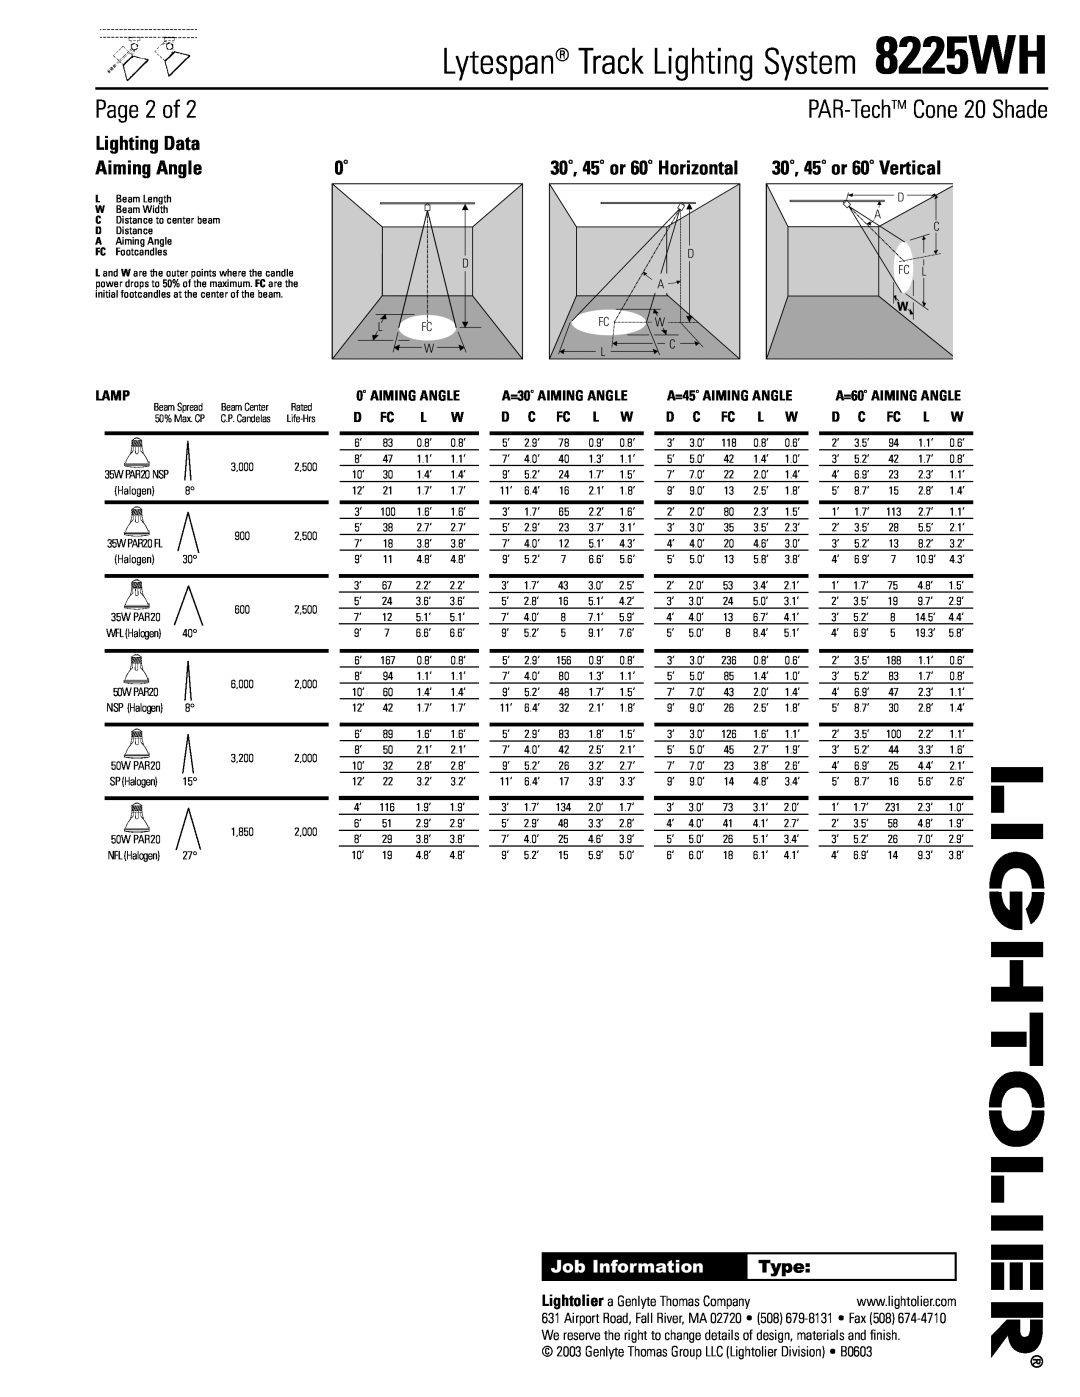 Lightolier Page 2 of, Lighting Data, Aiming Angle, Type, Lytespan Track Lighting System 8225WH, Job Information, Lamp 